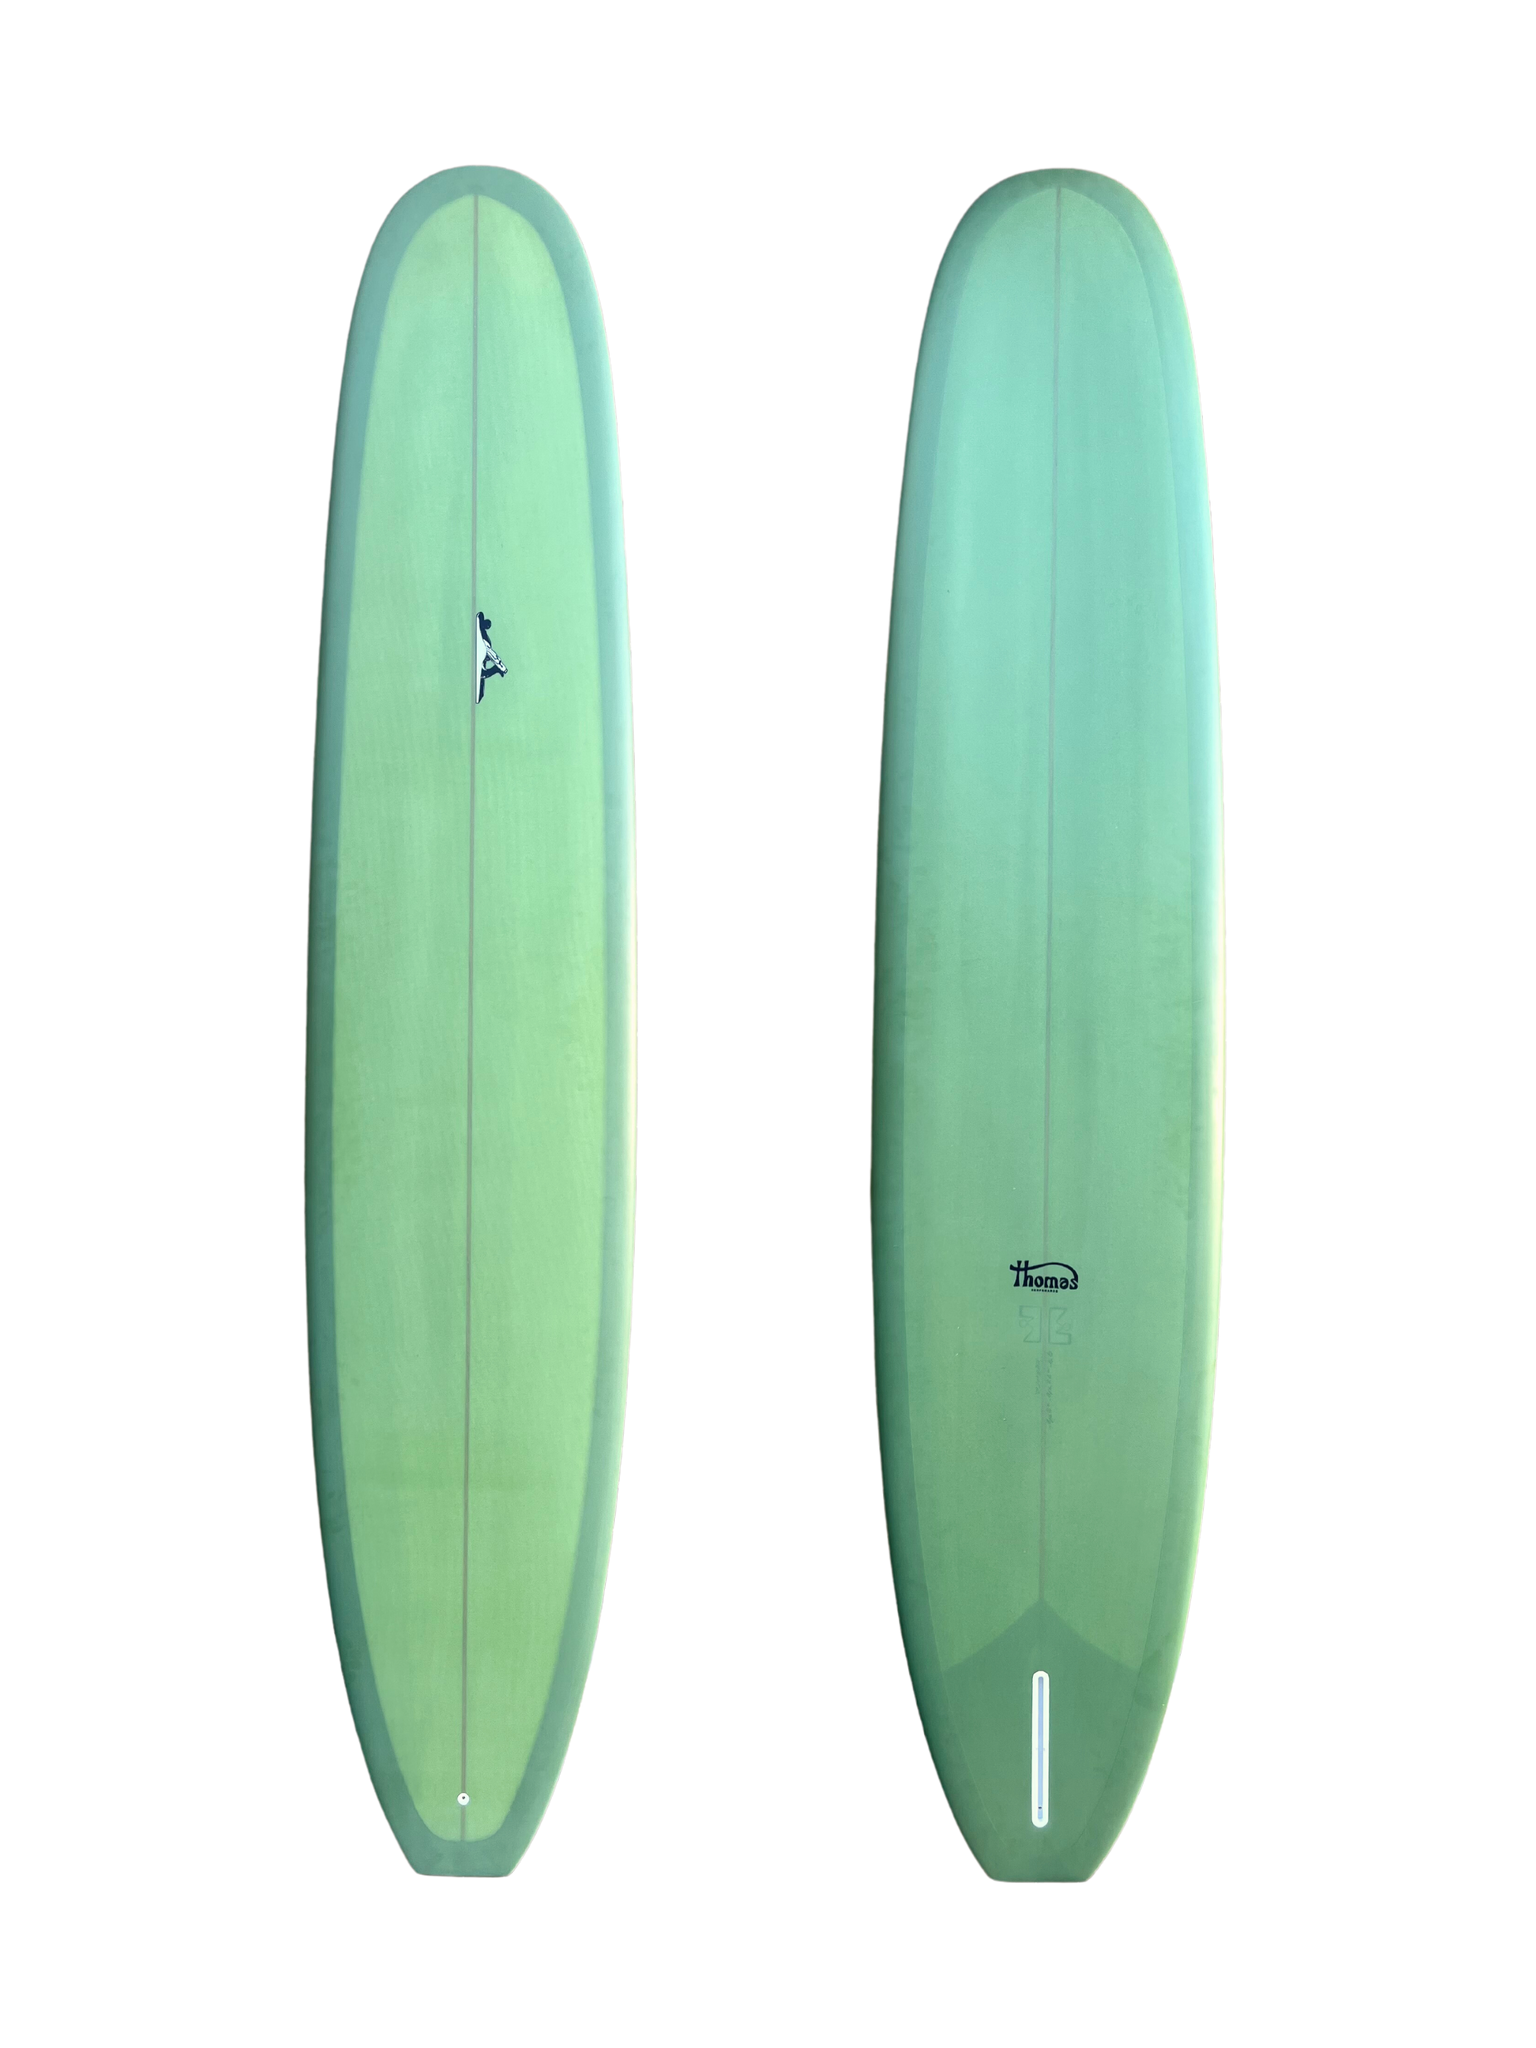 Thomas Bexton Surfboards Keeper 9'4"